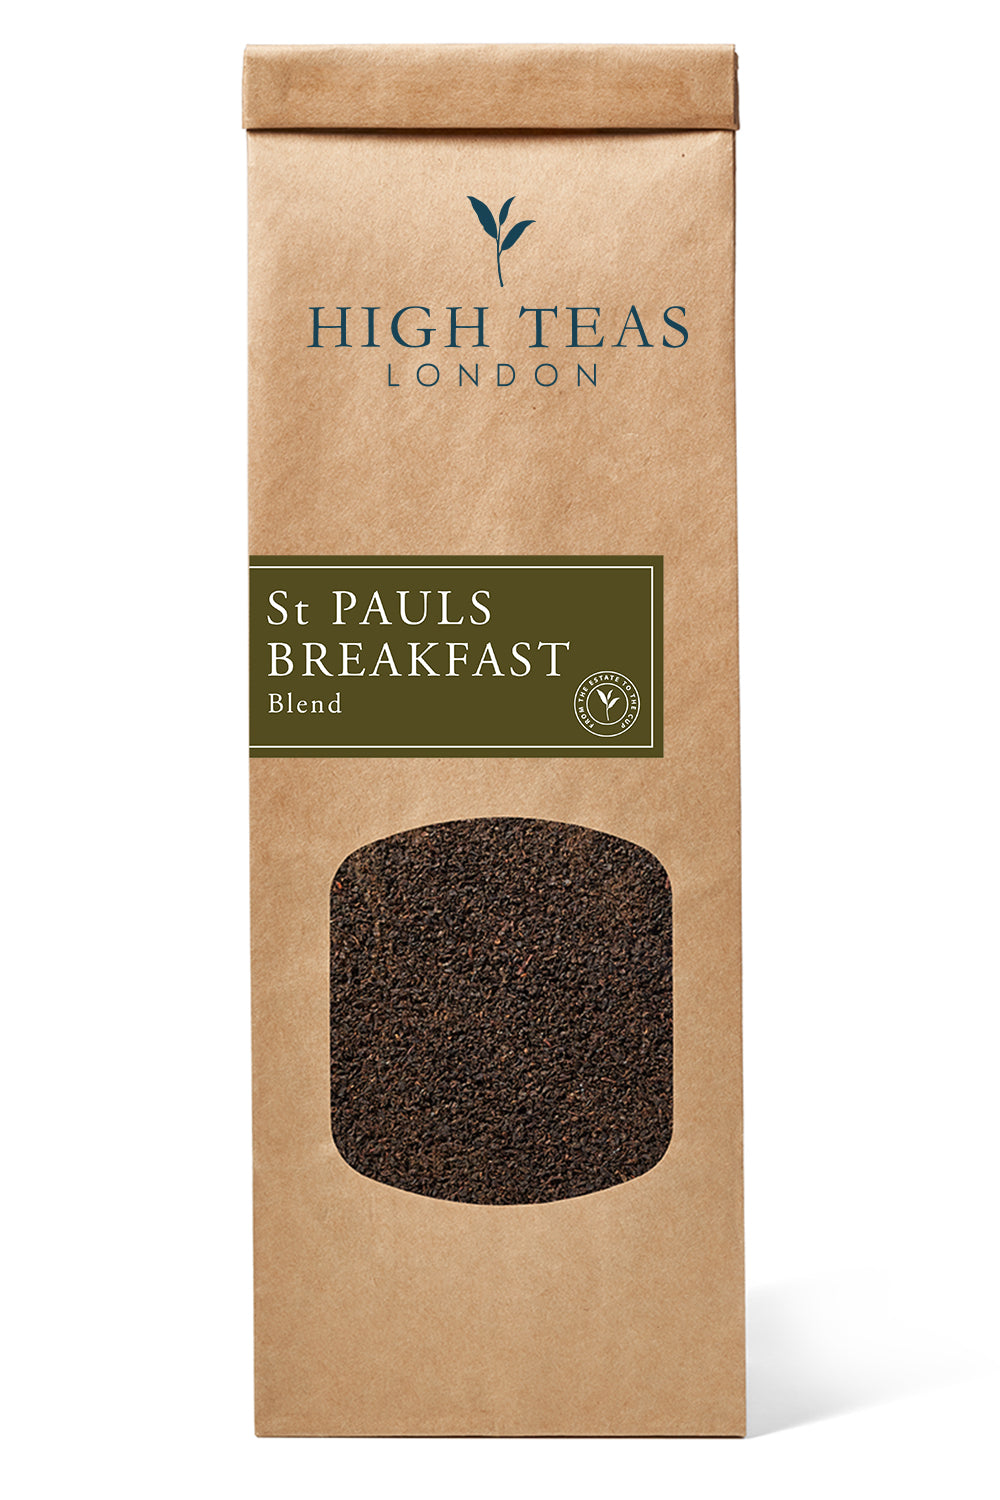 St Pauls, A Fine London Breakfast Blend-50g-Loose Leaf Tea-High Teas